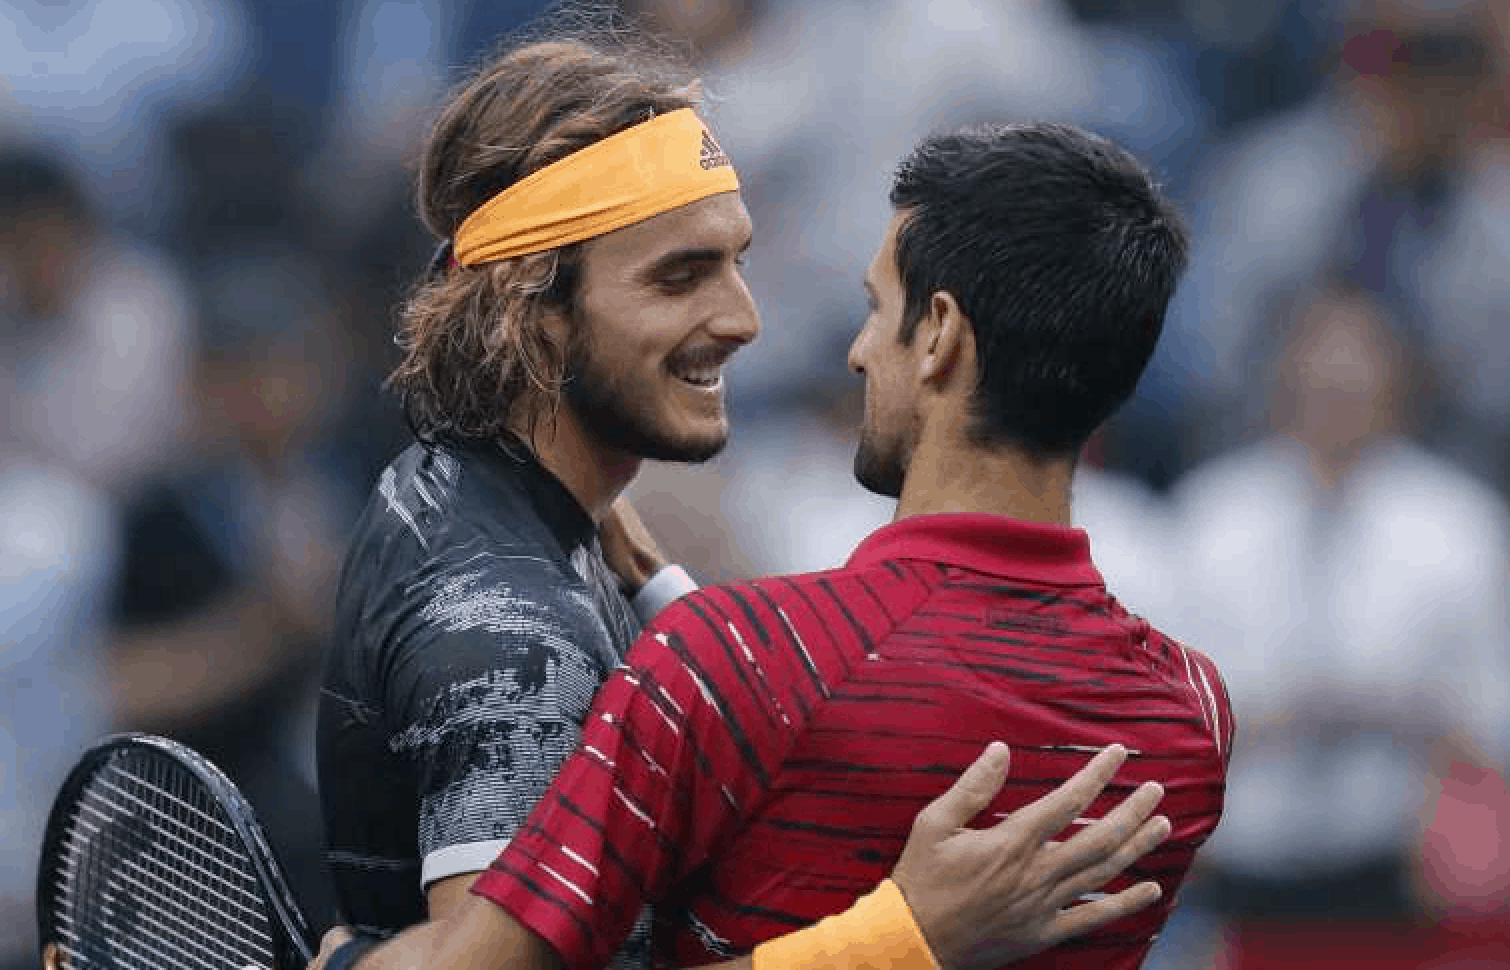 Novak Djokovic impressed by Stefanos Tsitsipas and other 'Next Gens'